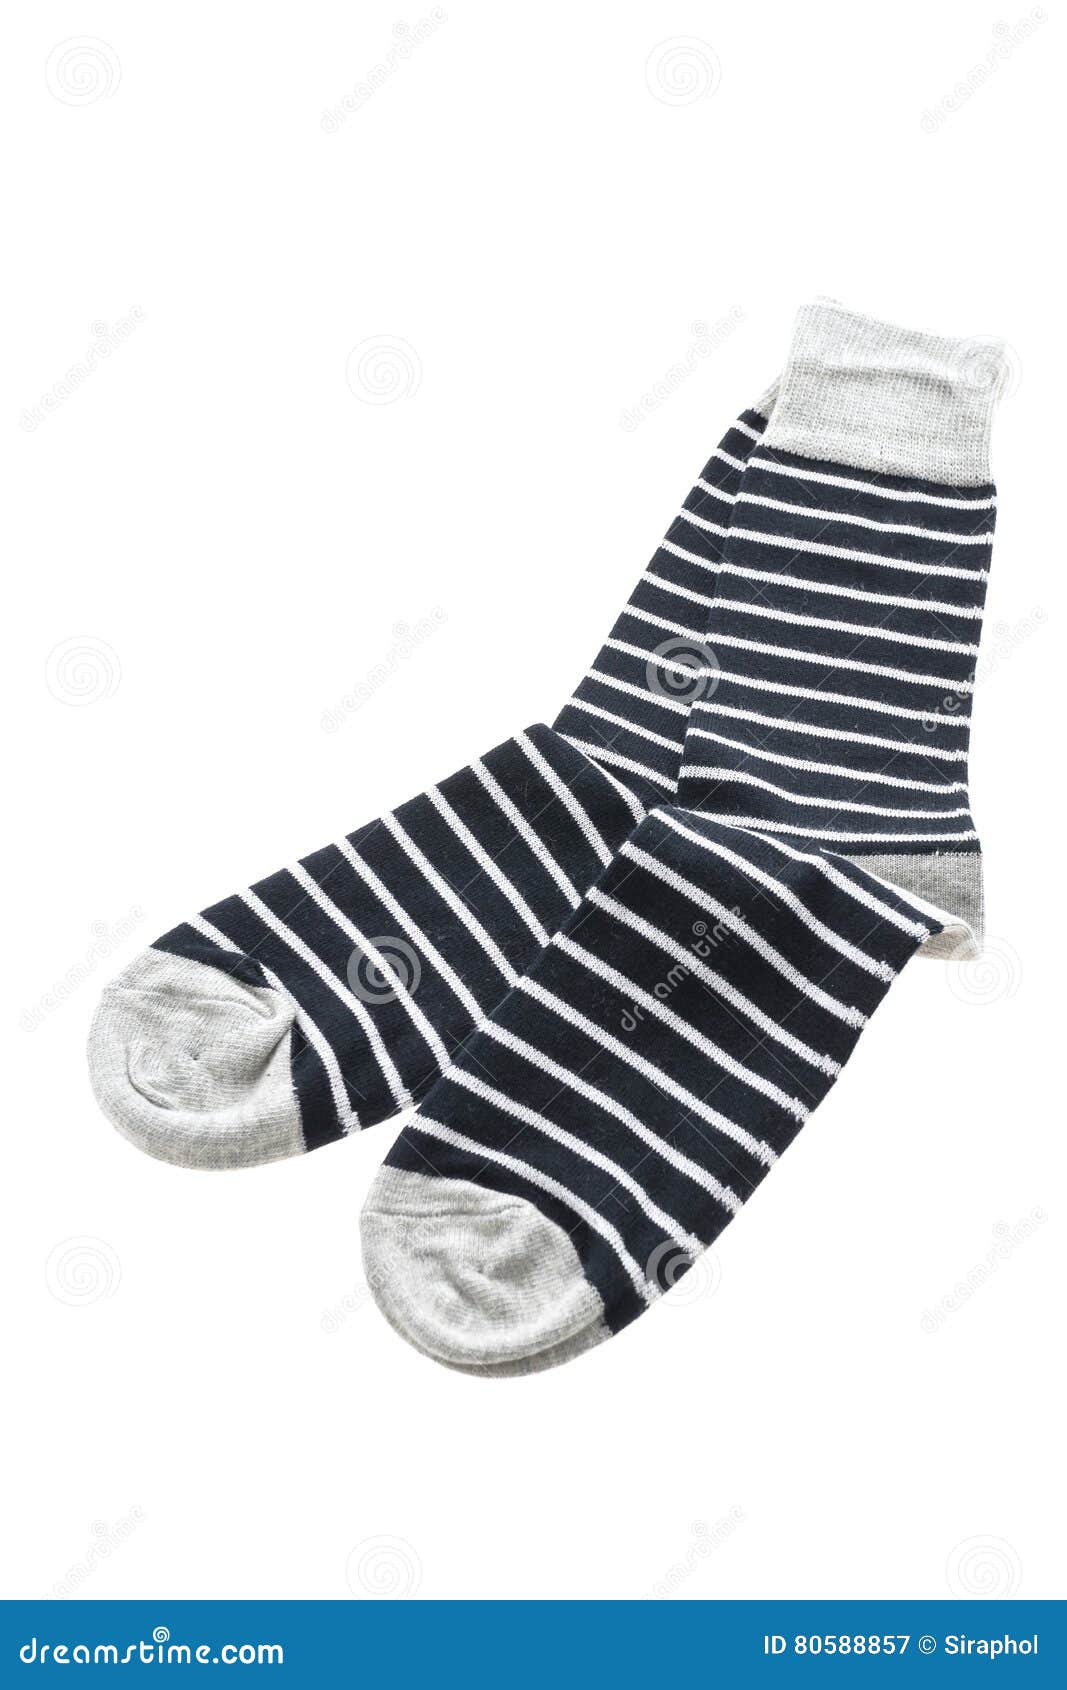 Sock isolated stock image. Image of background, gray - 80588857